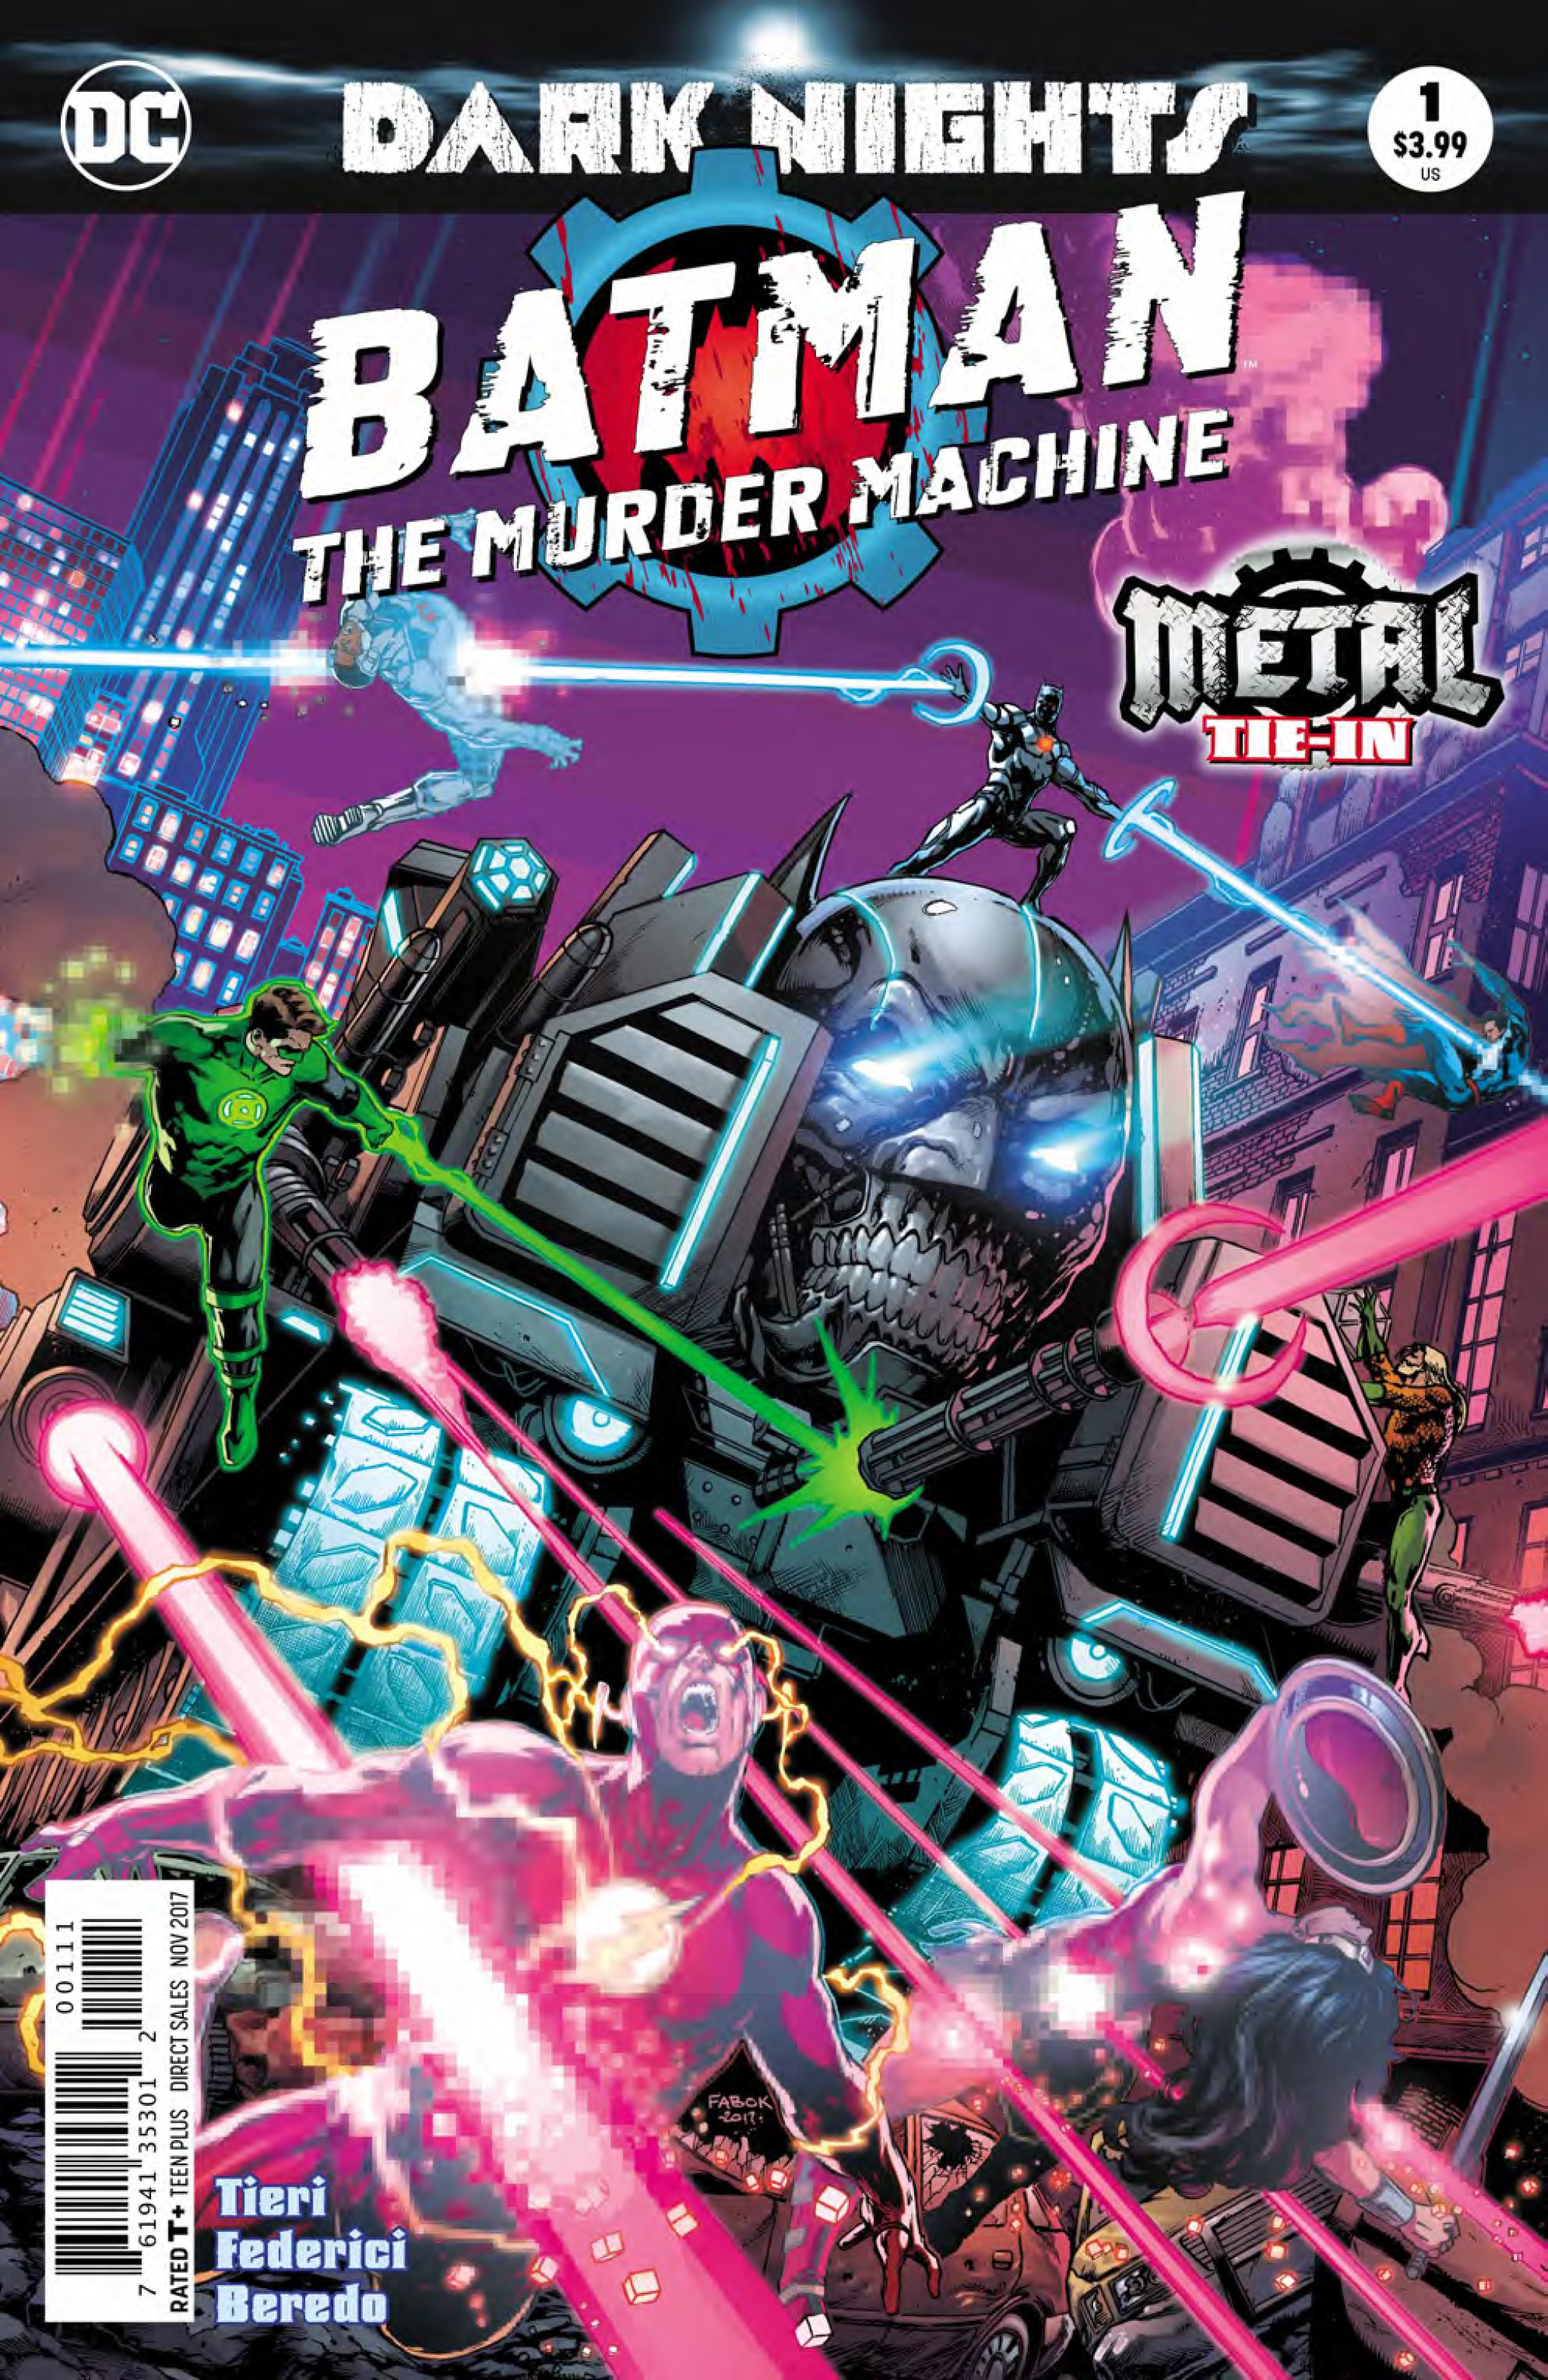 the murder machine cover